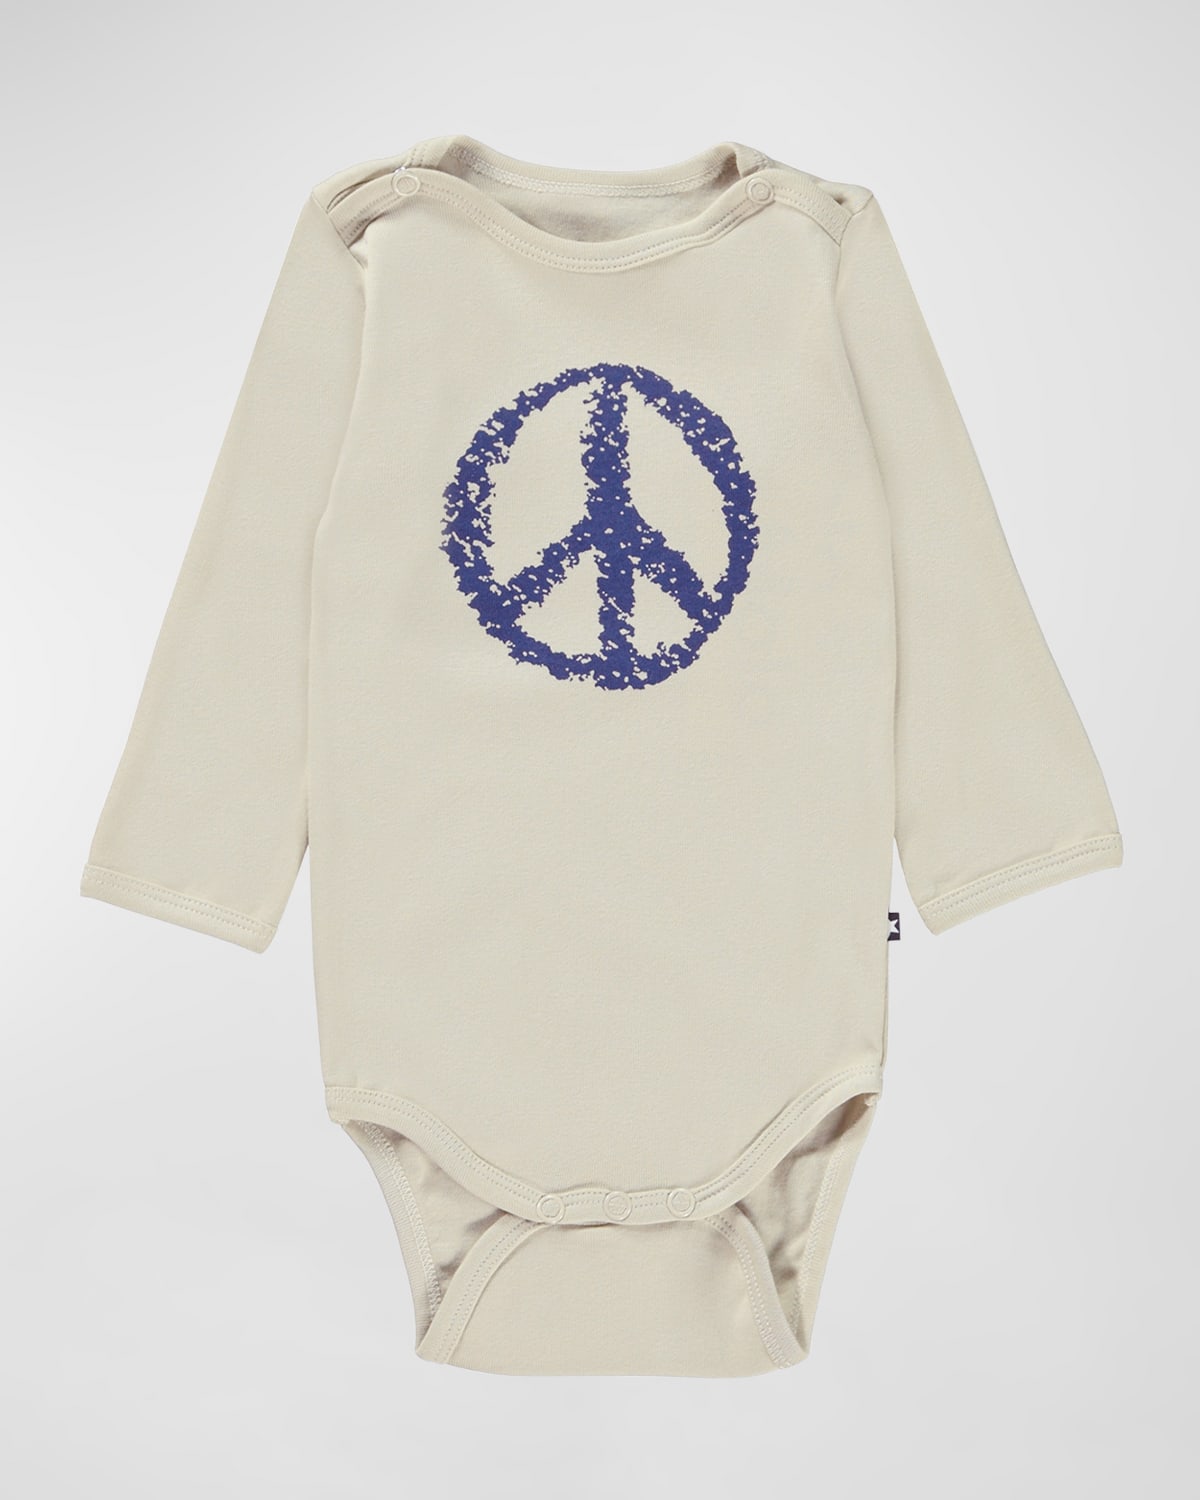 Kid's Peace Sign Graphic Bodysuit, Size 3M-18M